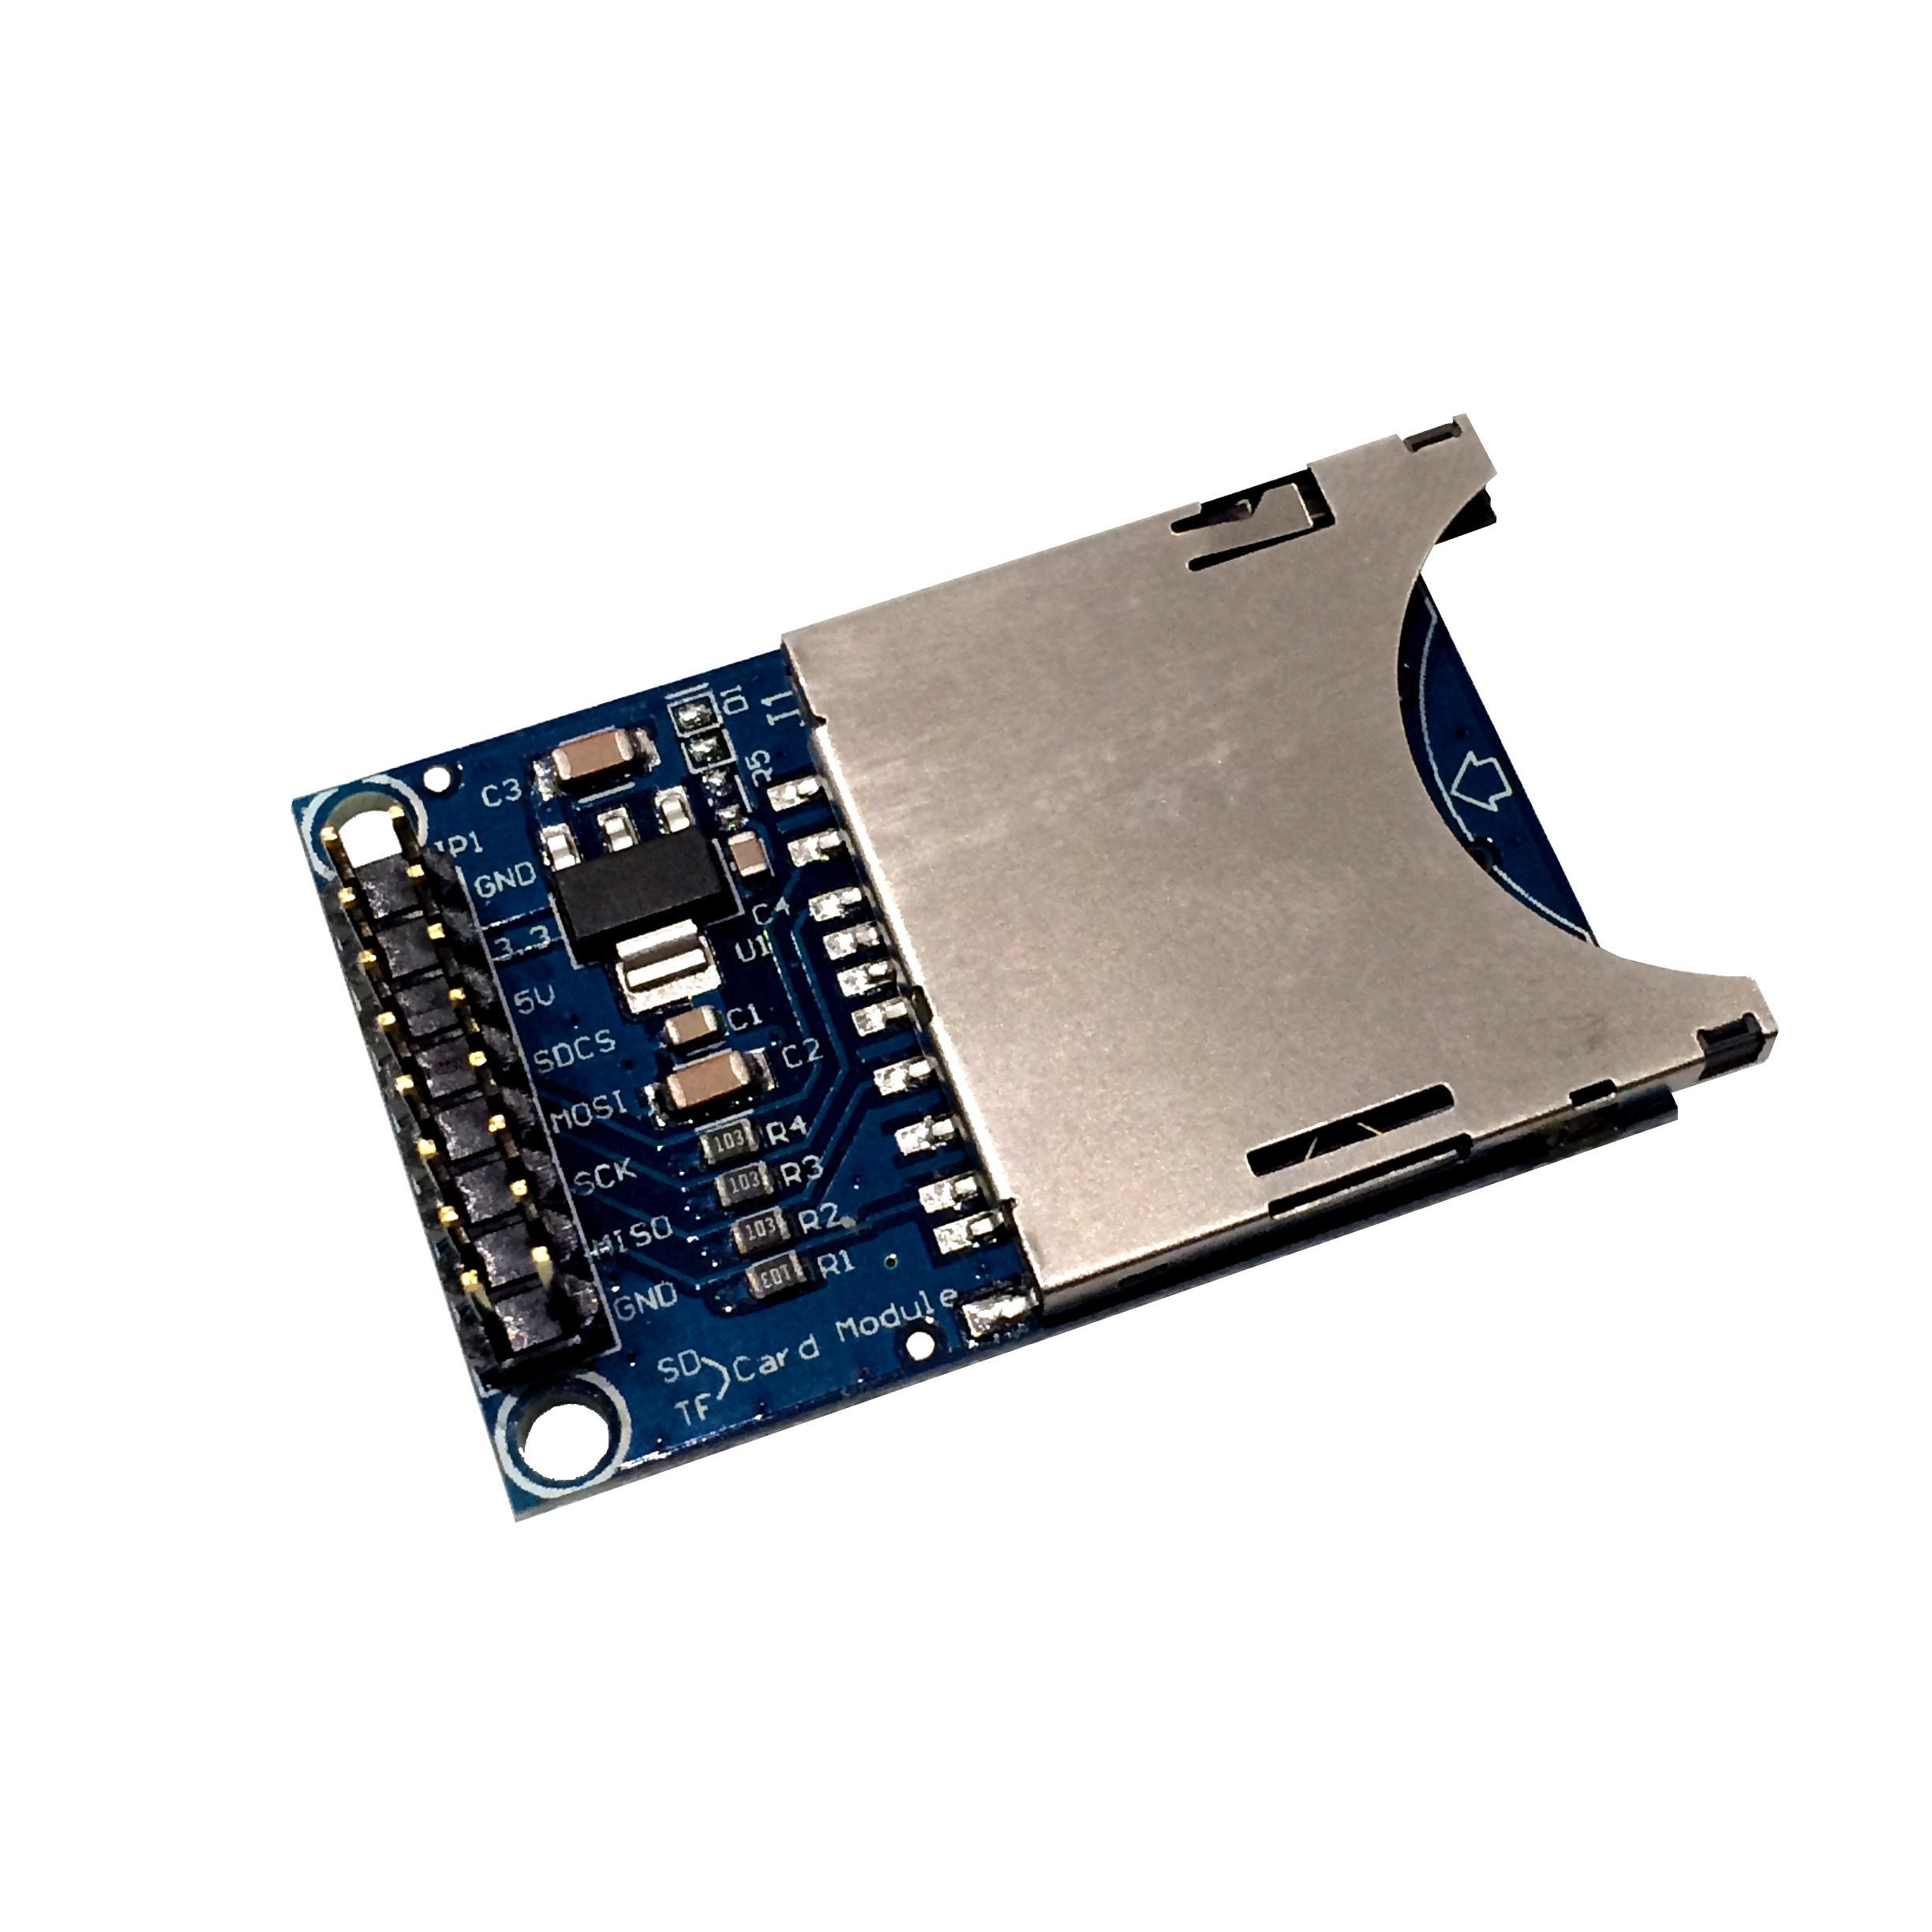 New Micro SD Card Module SPI for Arduino PIC Raspberry Pi